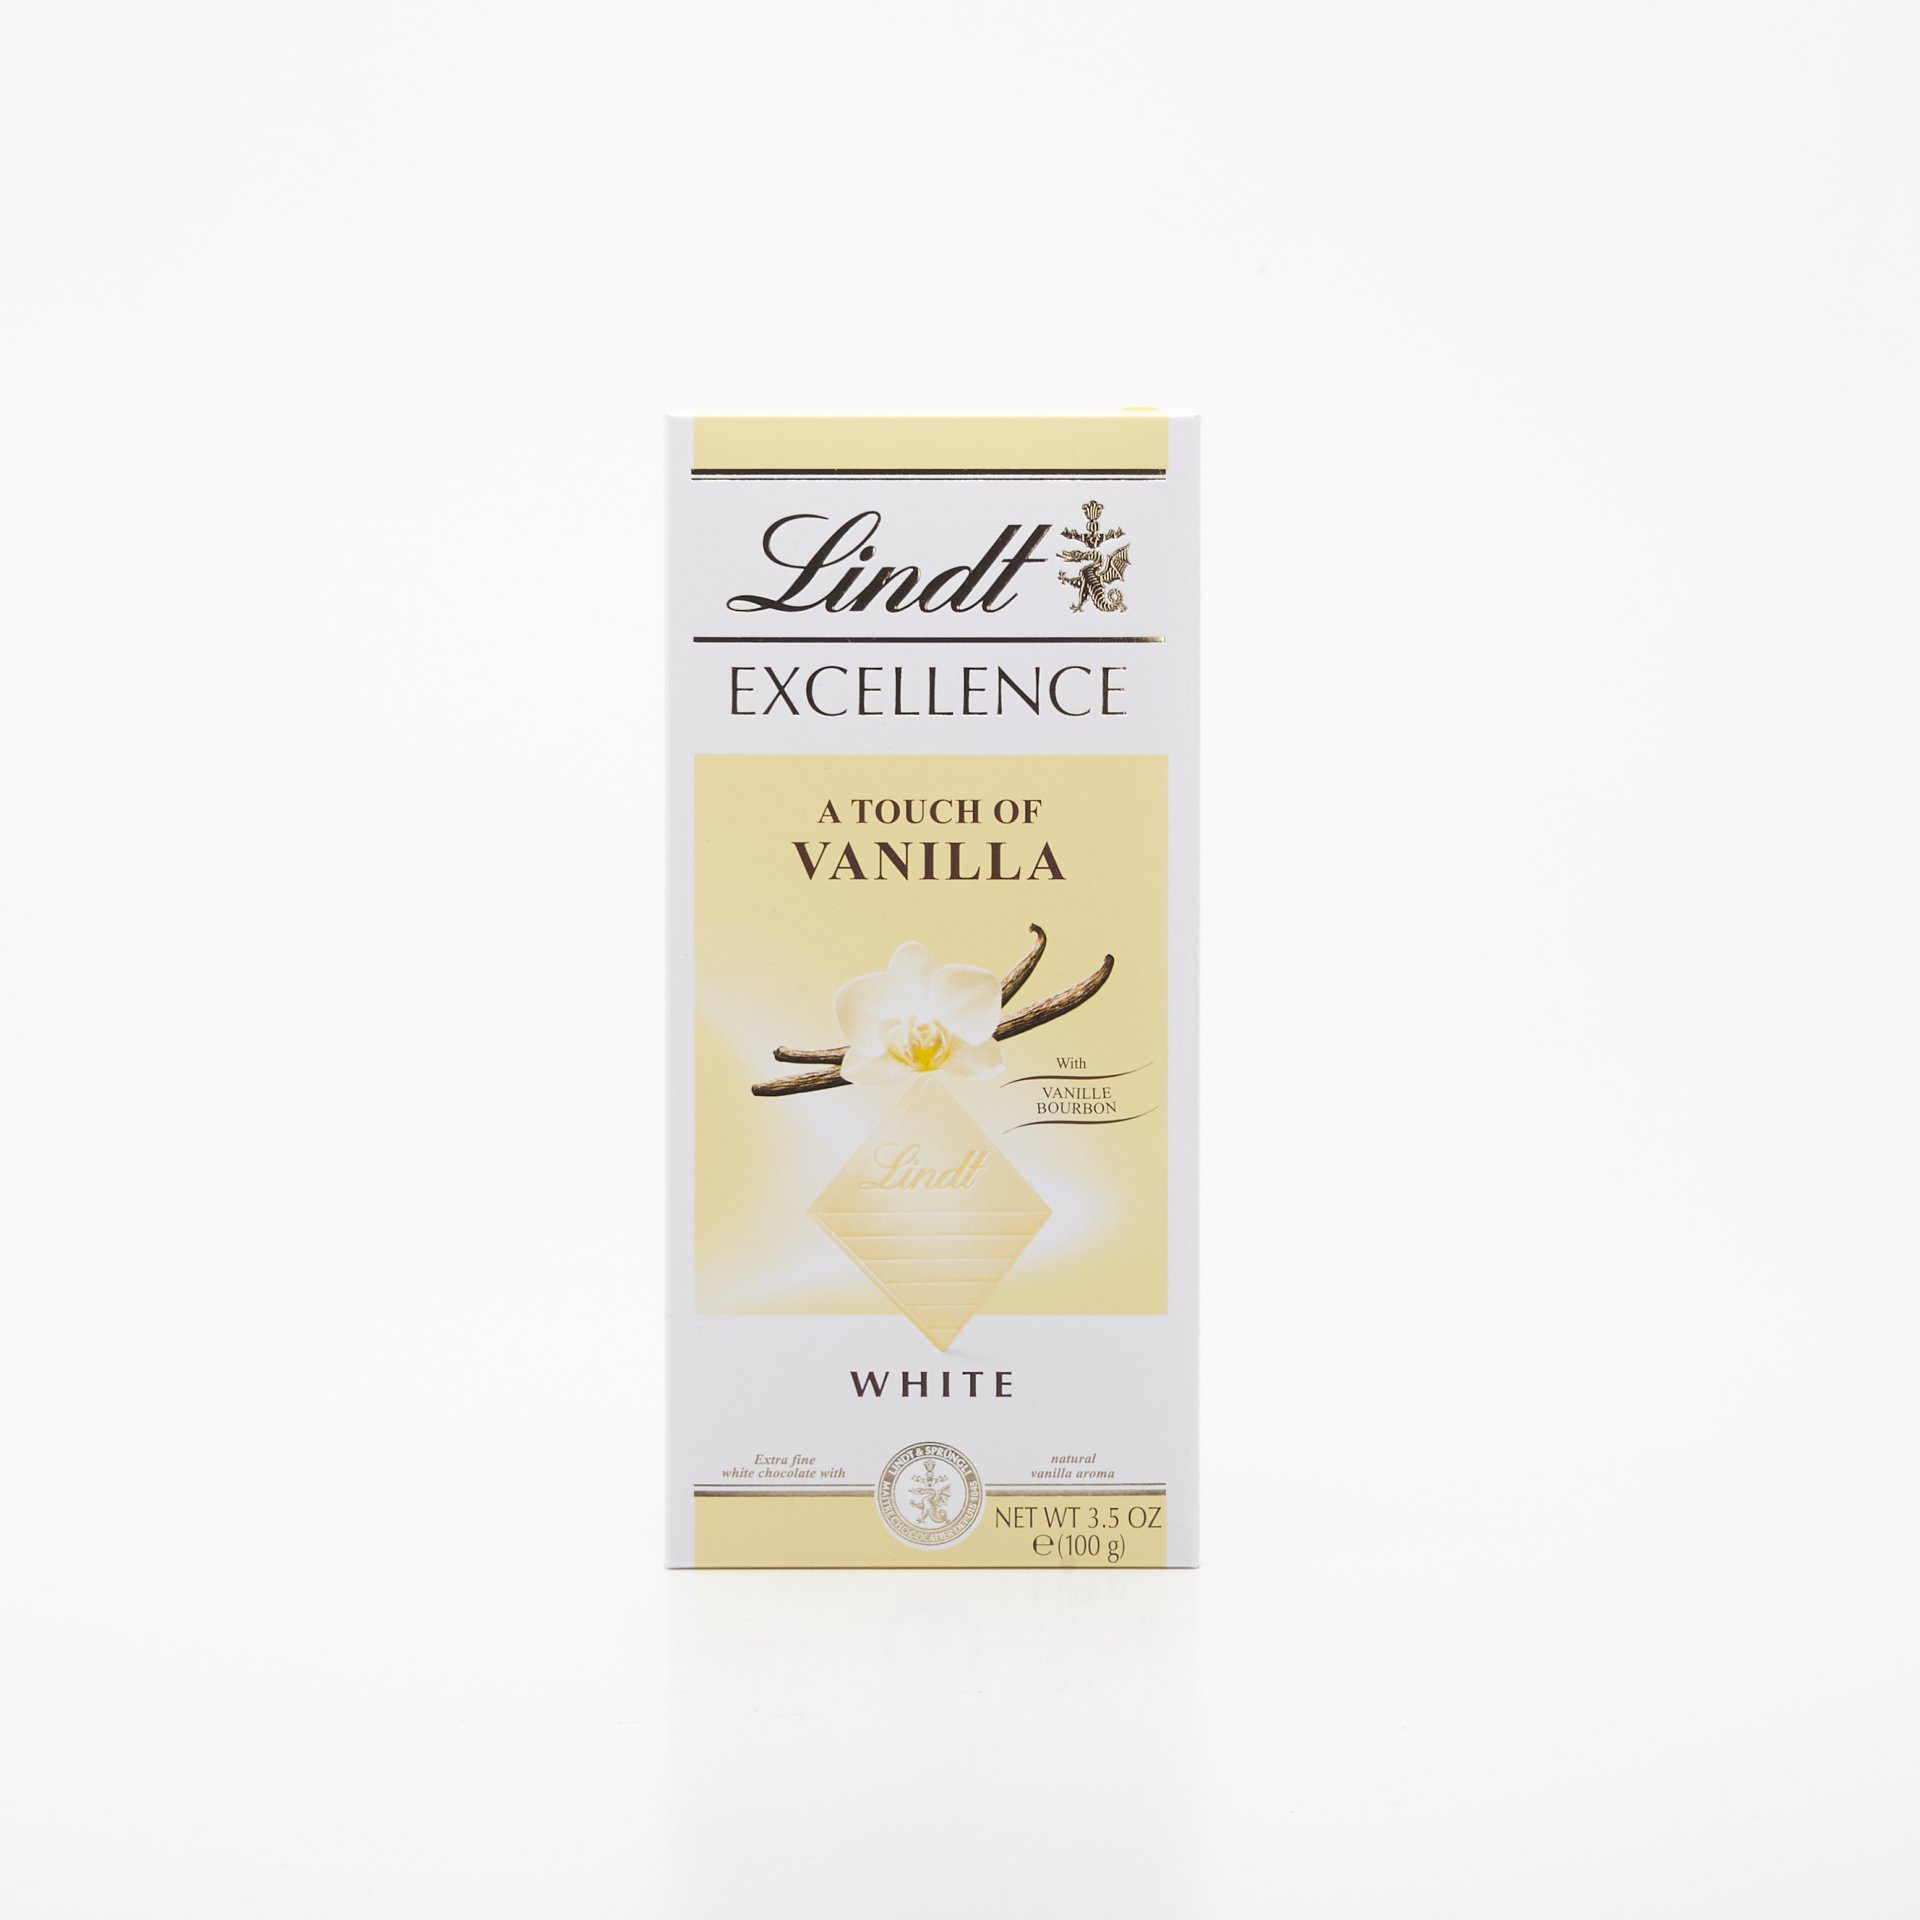 Čok. Excellence white vanilla 100g